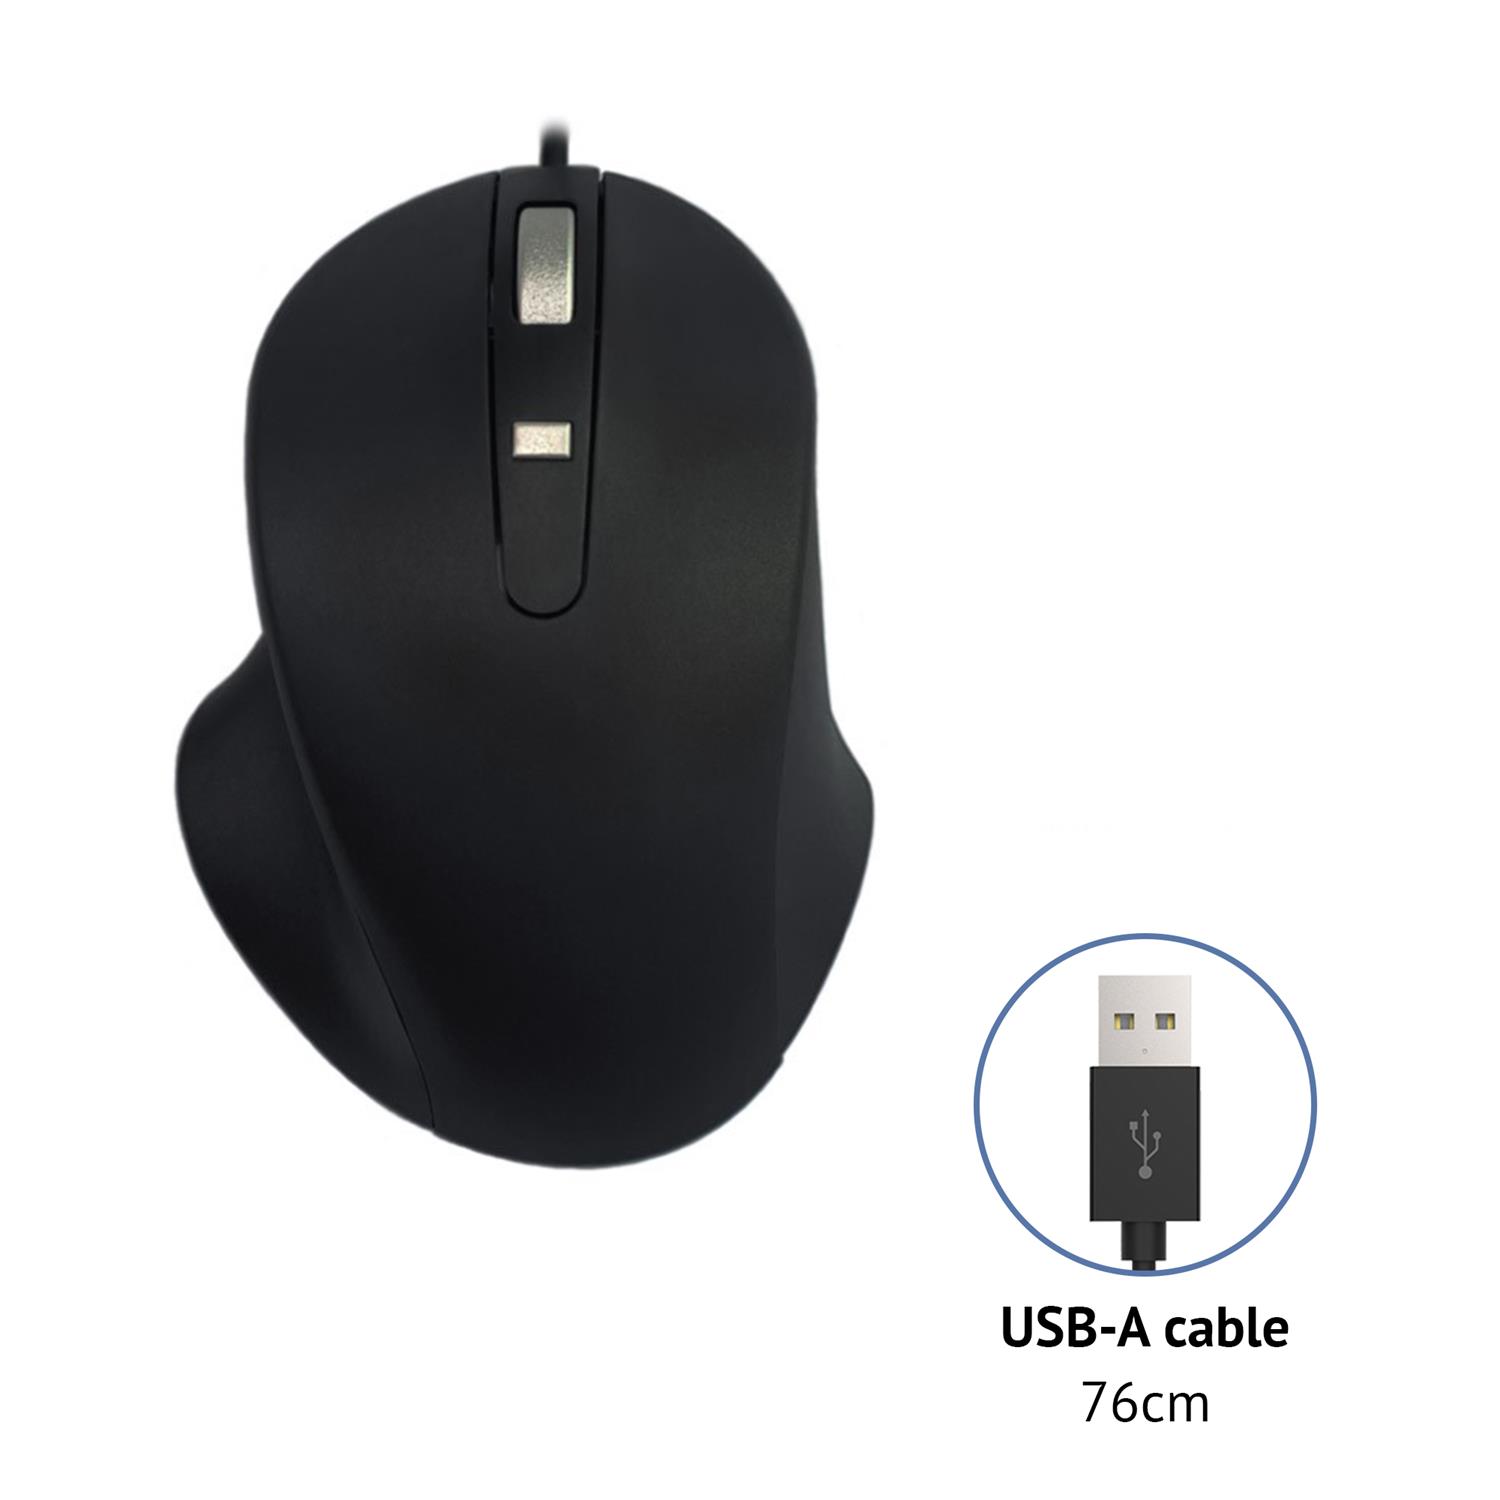 Mouse USB-A Matias in PBT, con cavo - nero